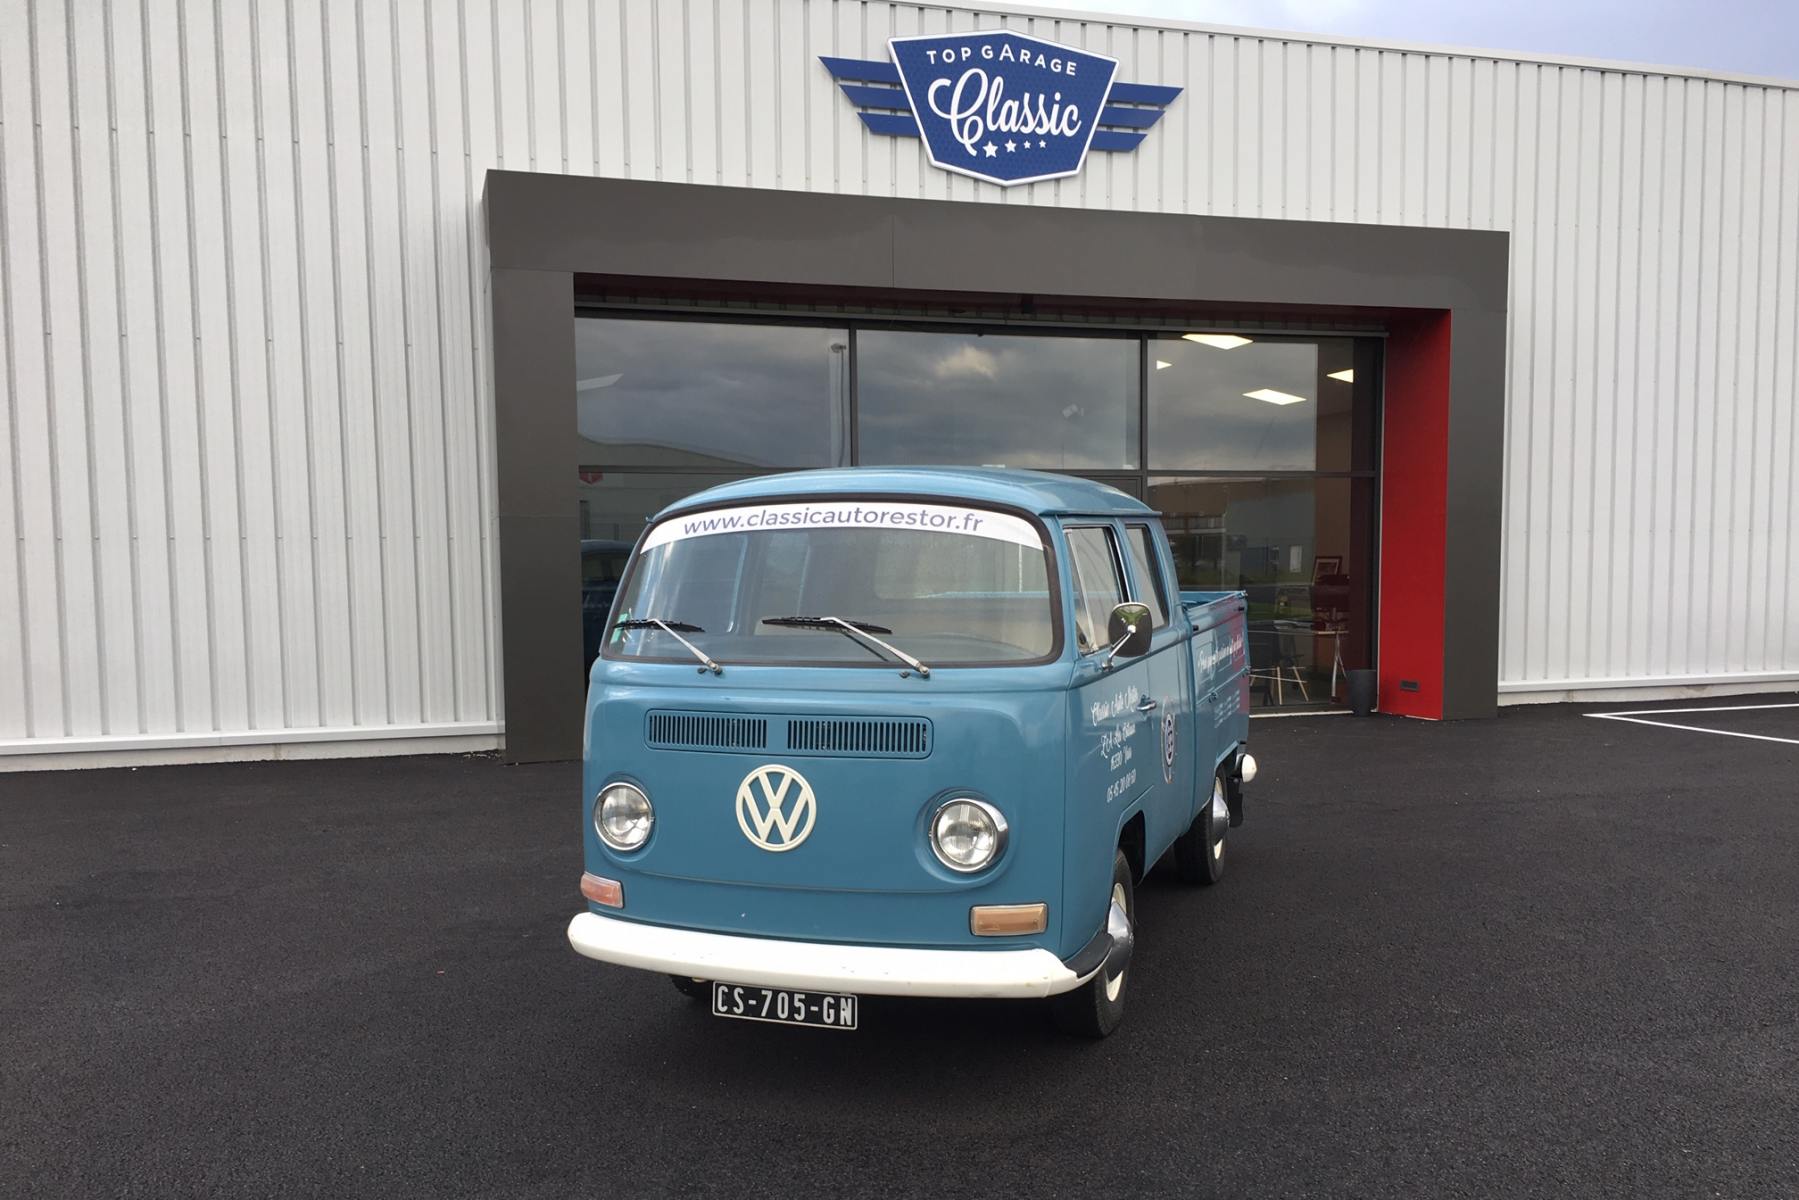 annonce-vente-Combi Pick-up 6 Places-Volkswagen-Classic Auto Restor - Angouleme - Charente - France